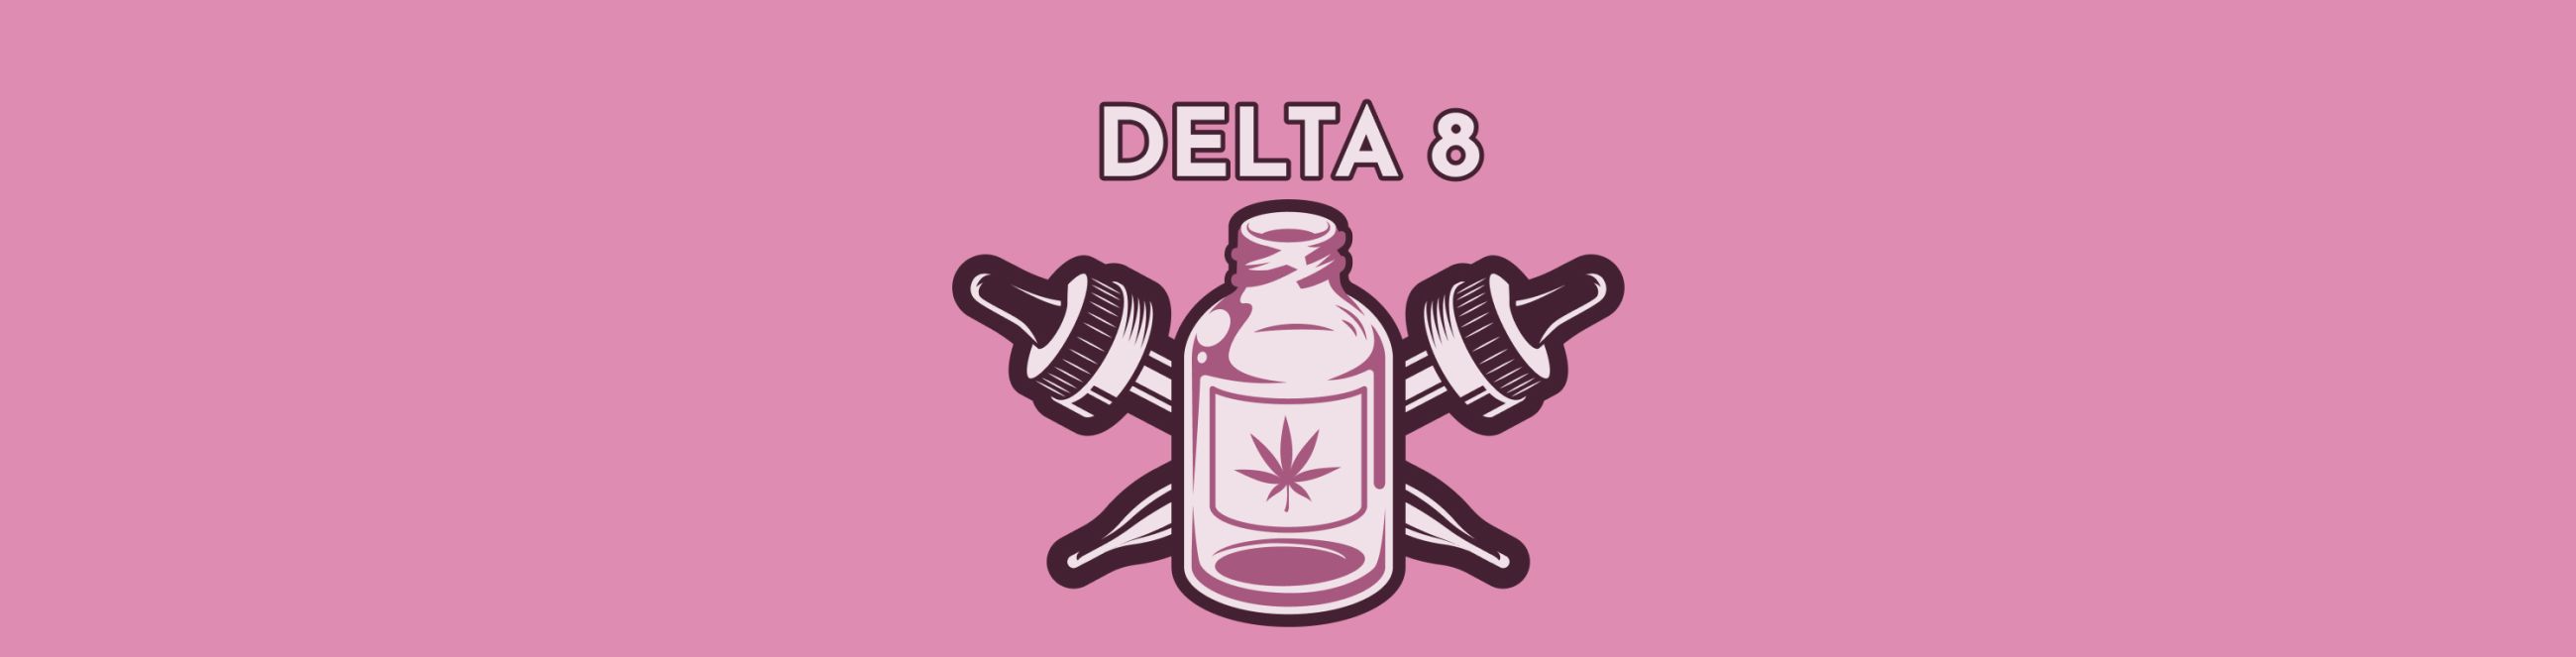 Delta 8 Dosage Chart - The Perfect Dose